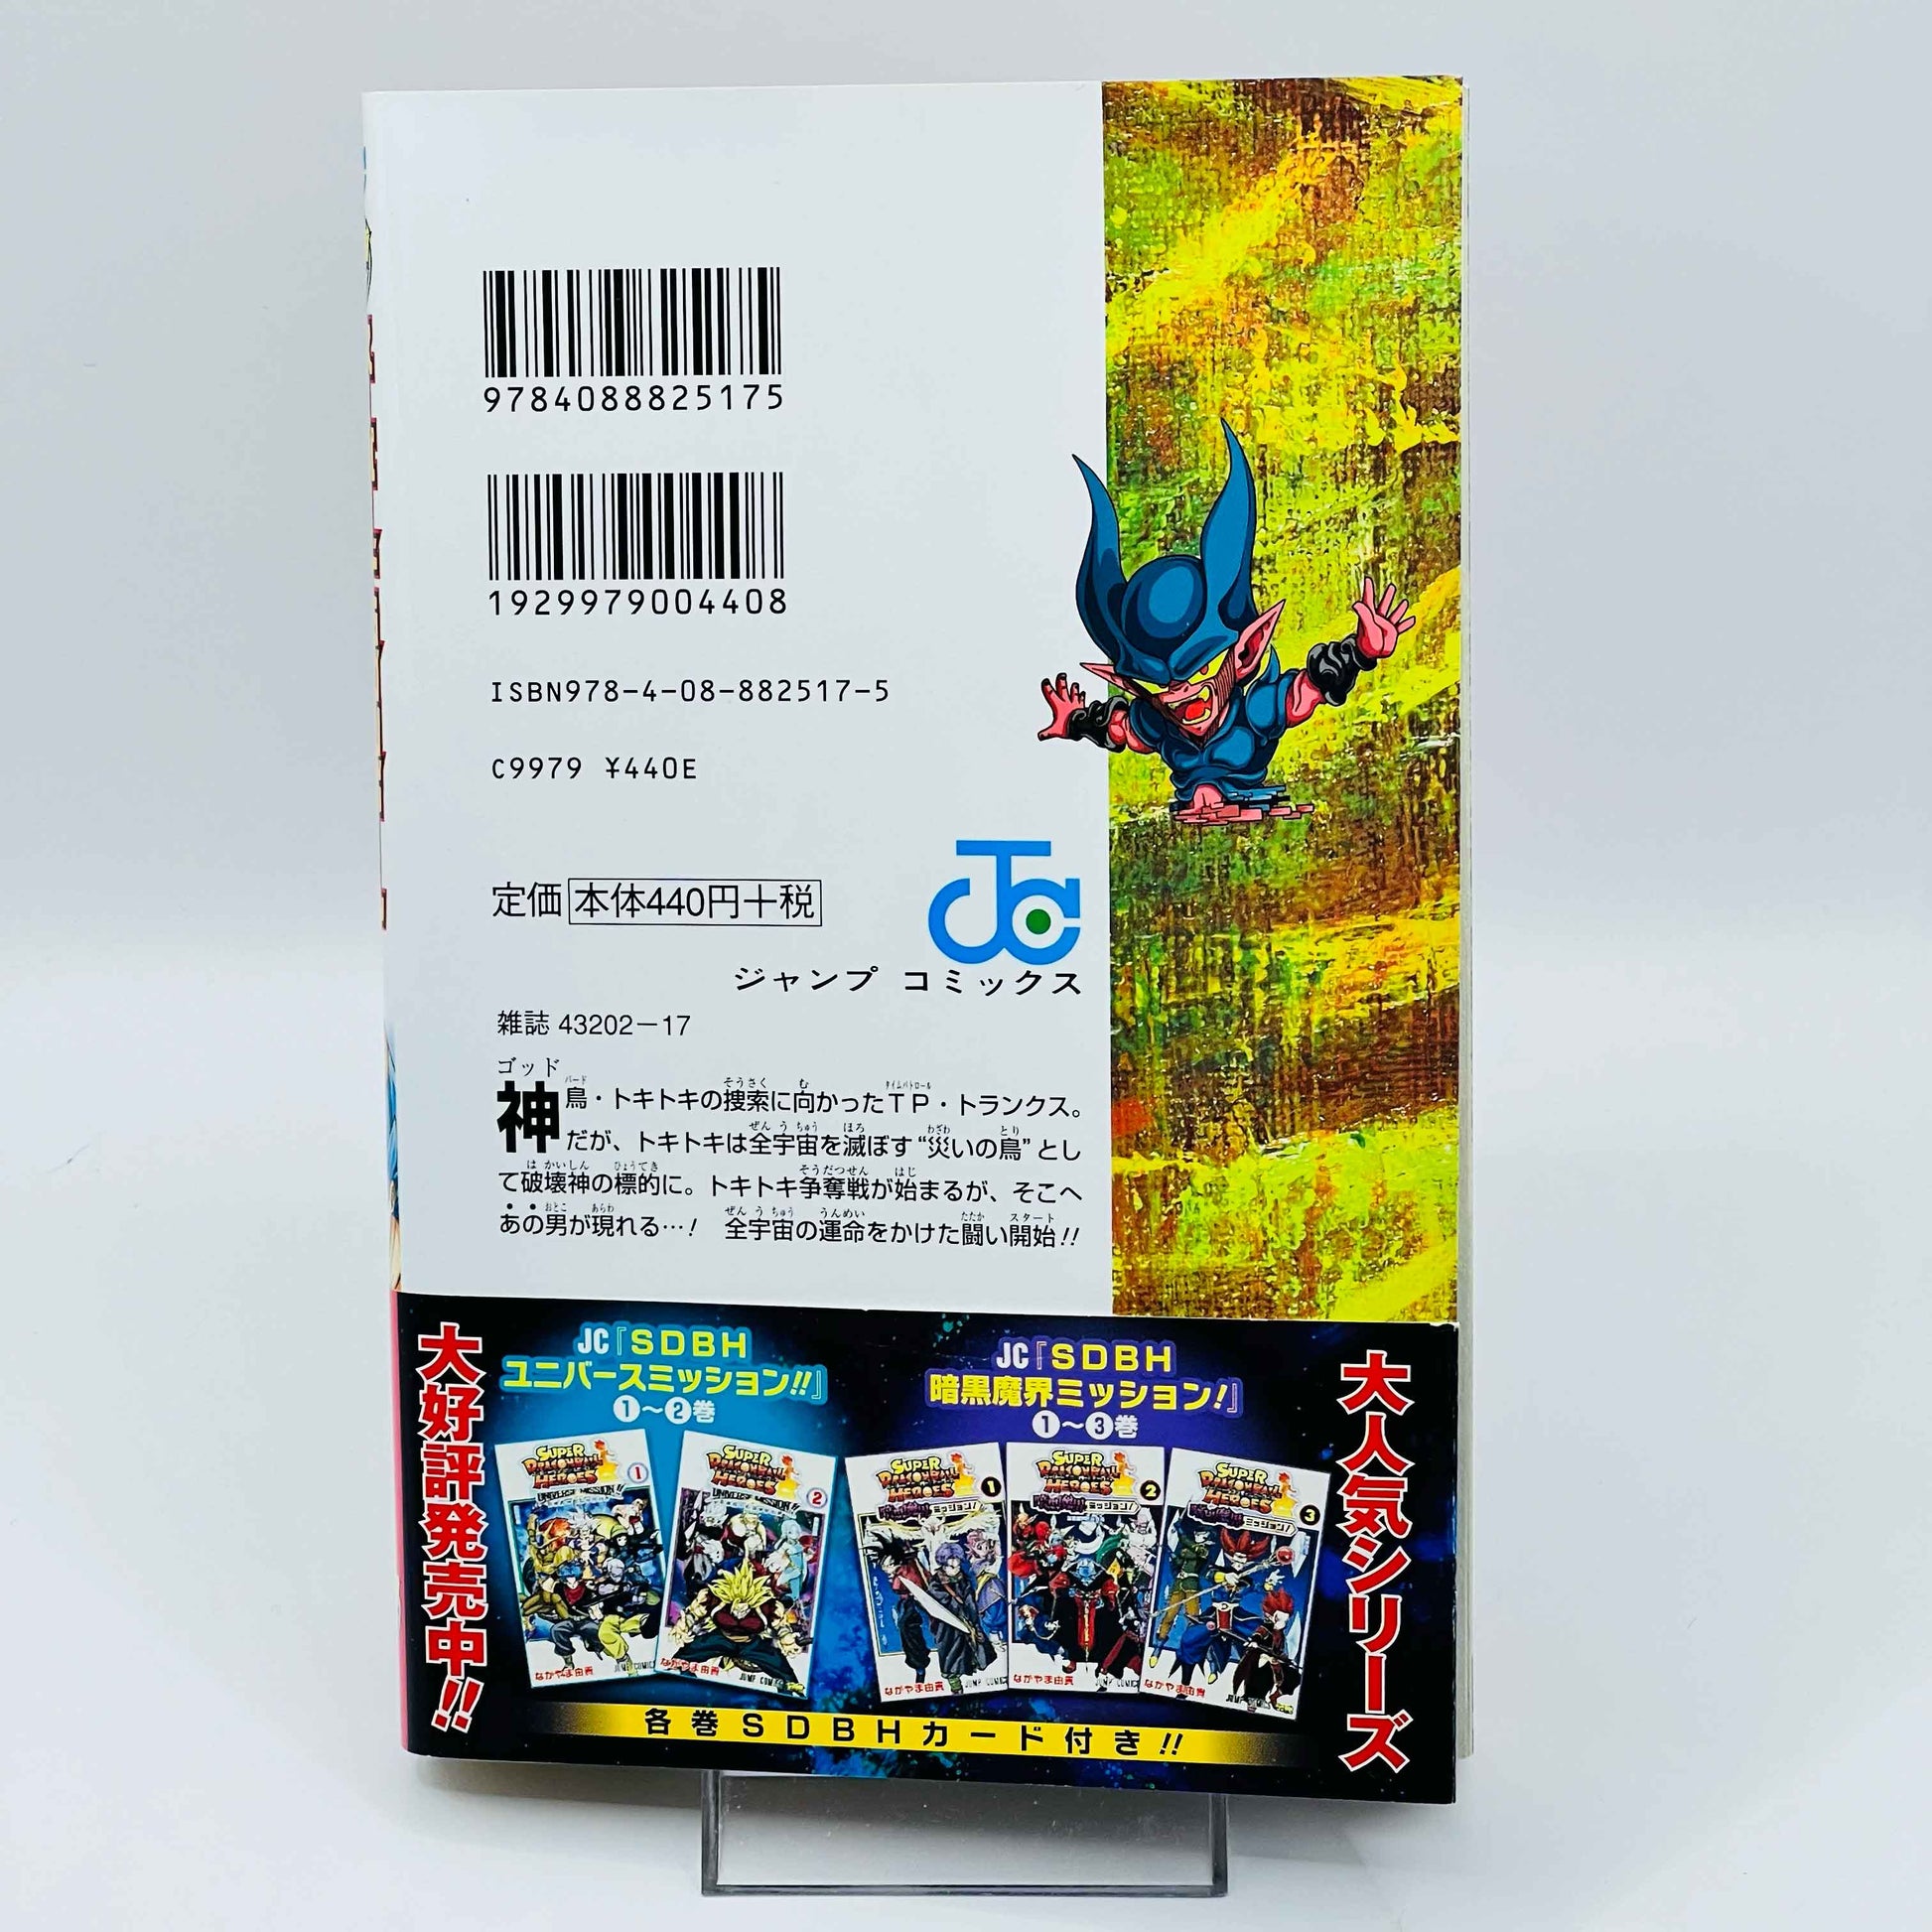 Super Dragon Ball Heroes Big Bang Mission - Volume 01 /w Obi - 1stPrint.net - 1st First Print Edition Manga Store - M-DBHEROESBBM-01-002